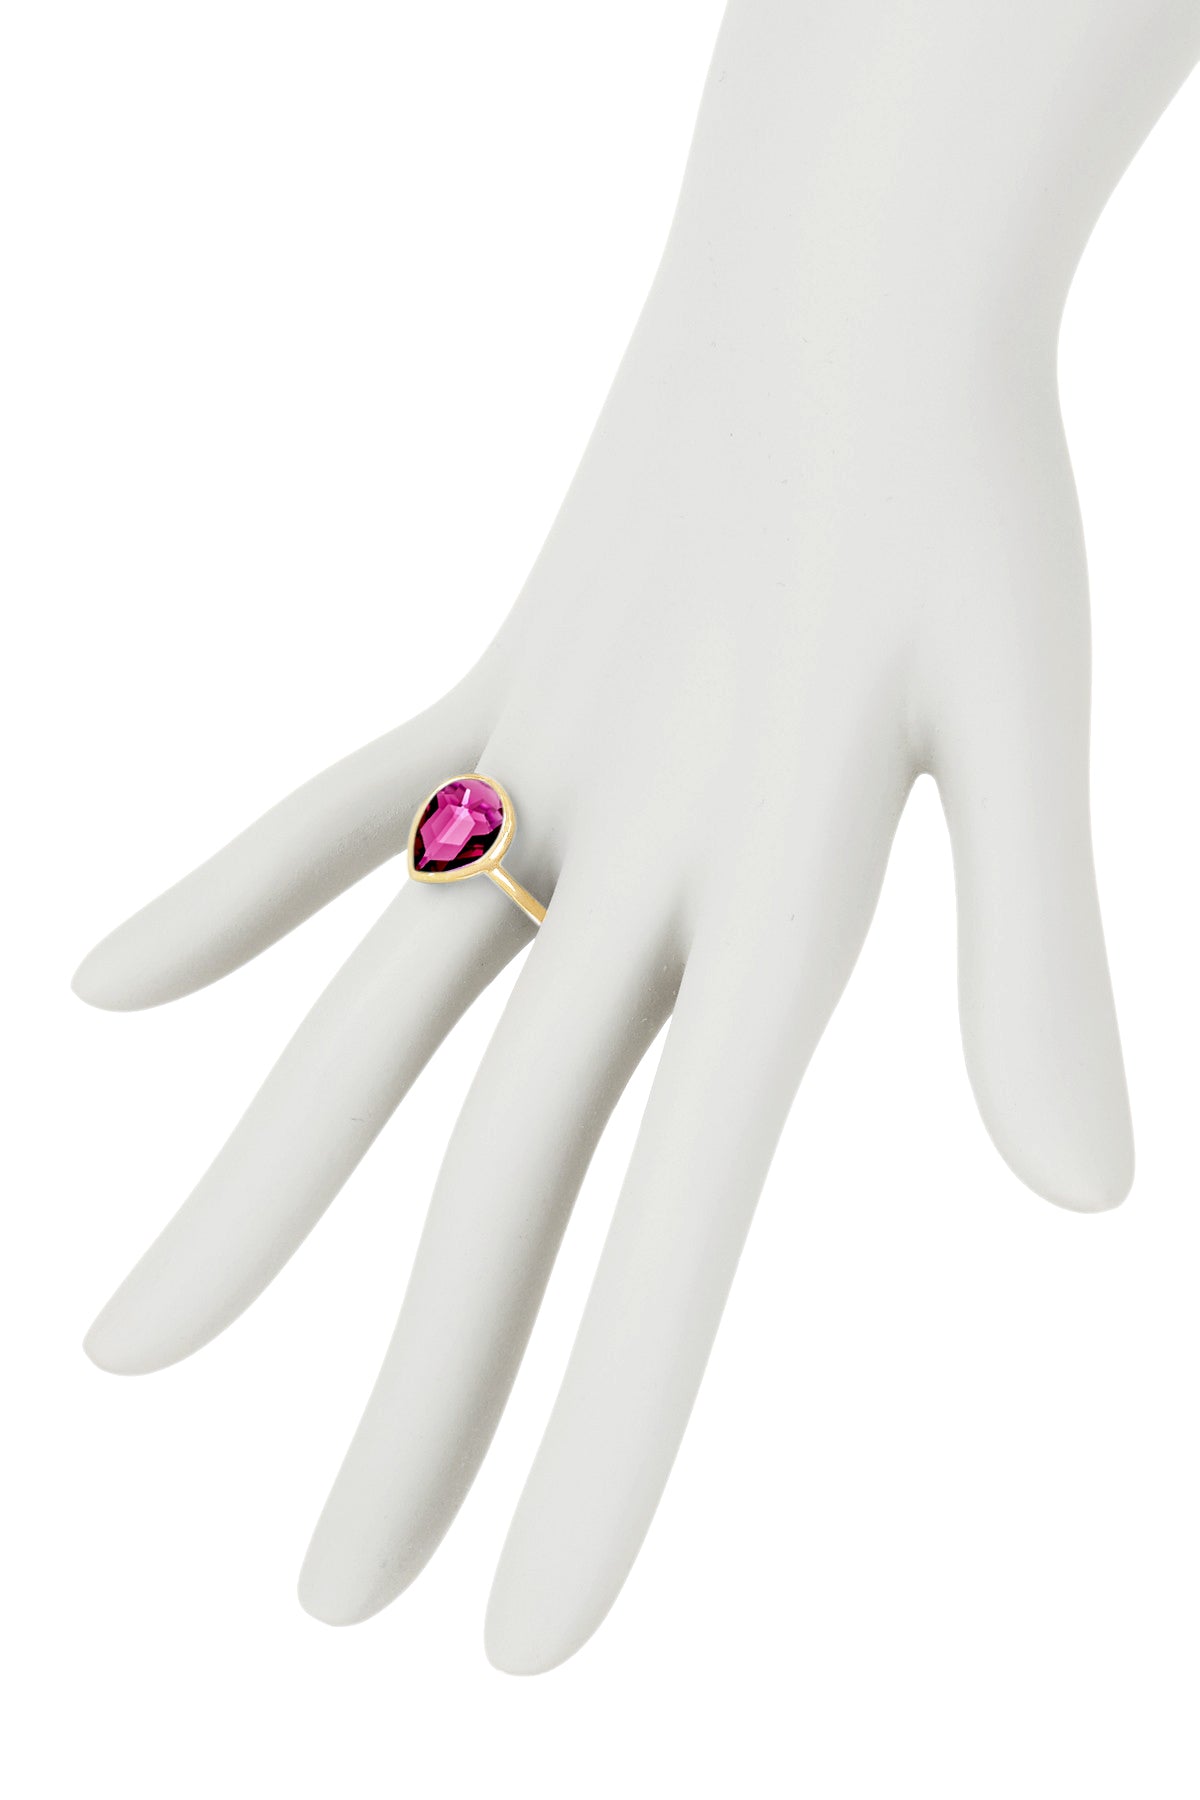 Raspberry Crystal Pear Ring In 14k - GF